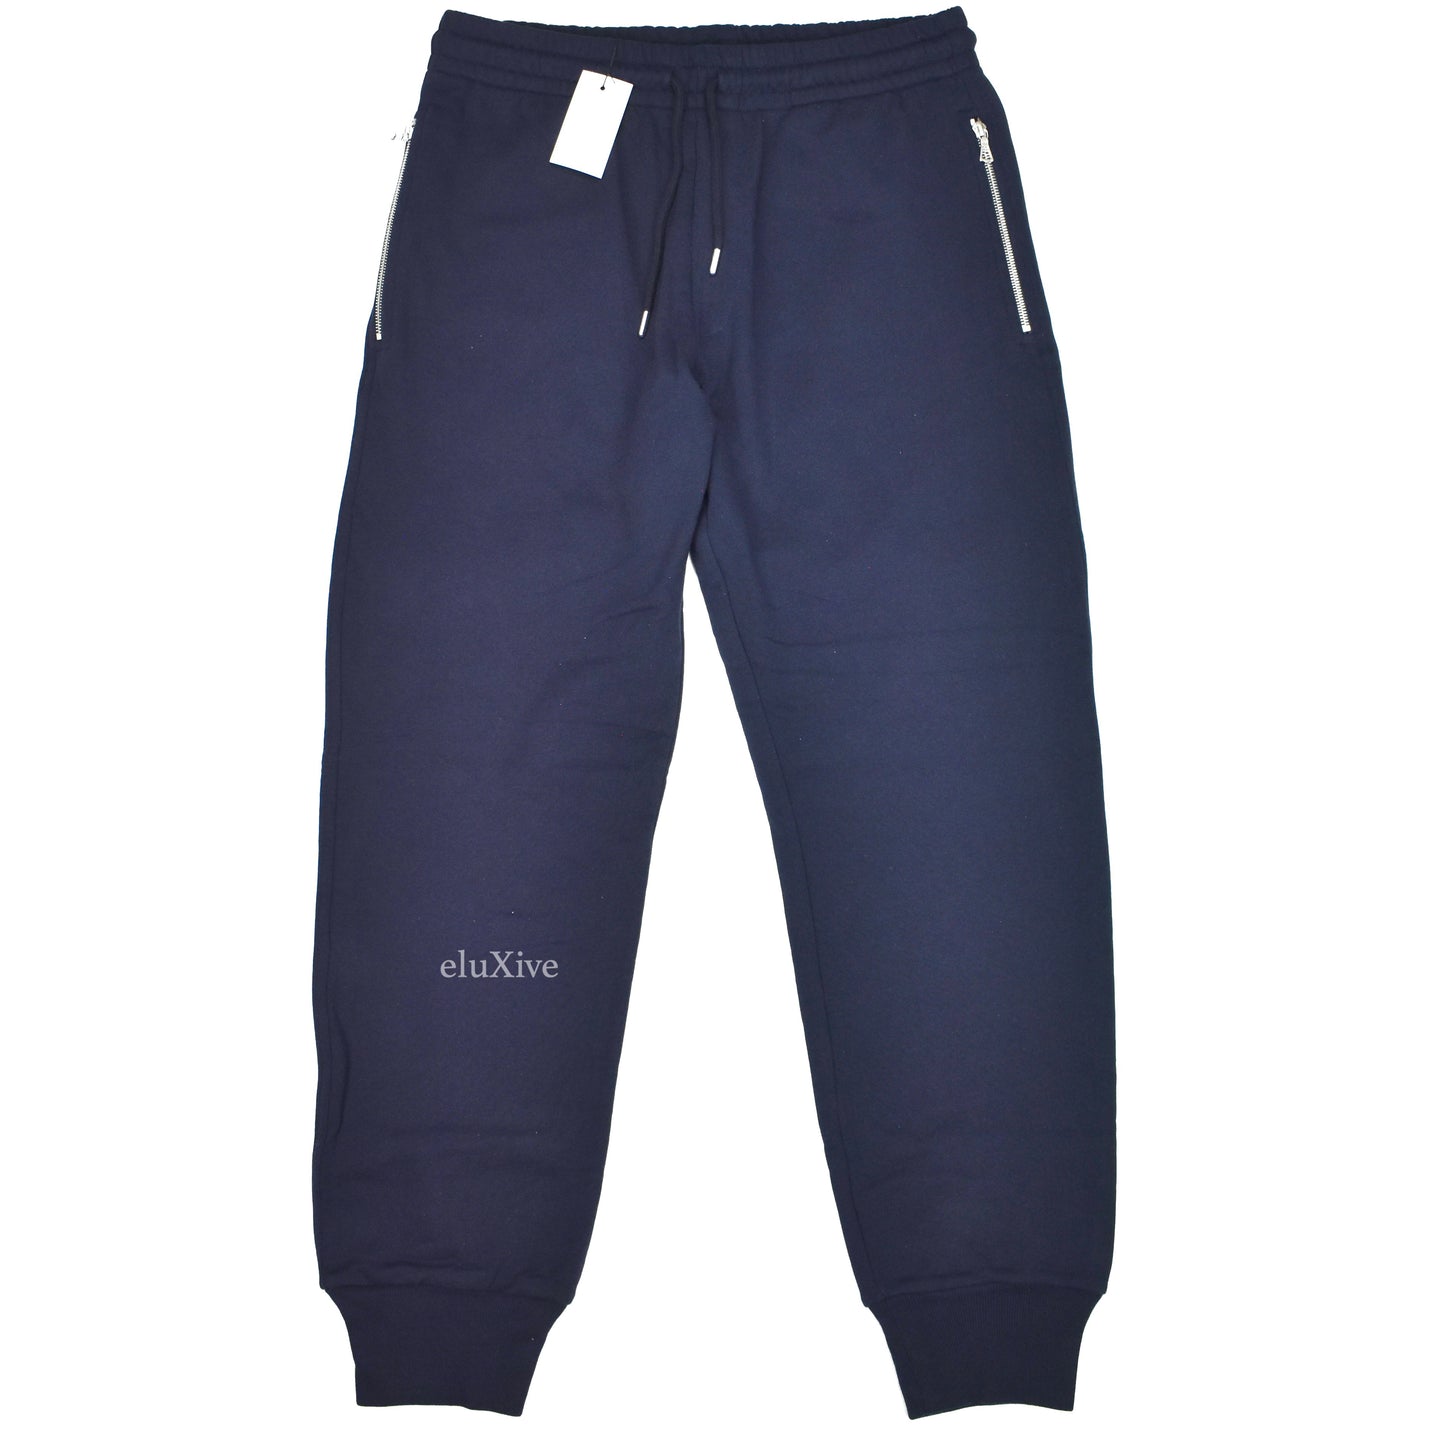 Dries Van Noten - Navy Blue French Terry Jogger Pants / Sweatpants